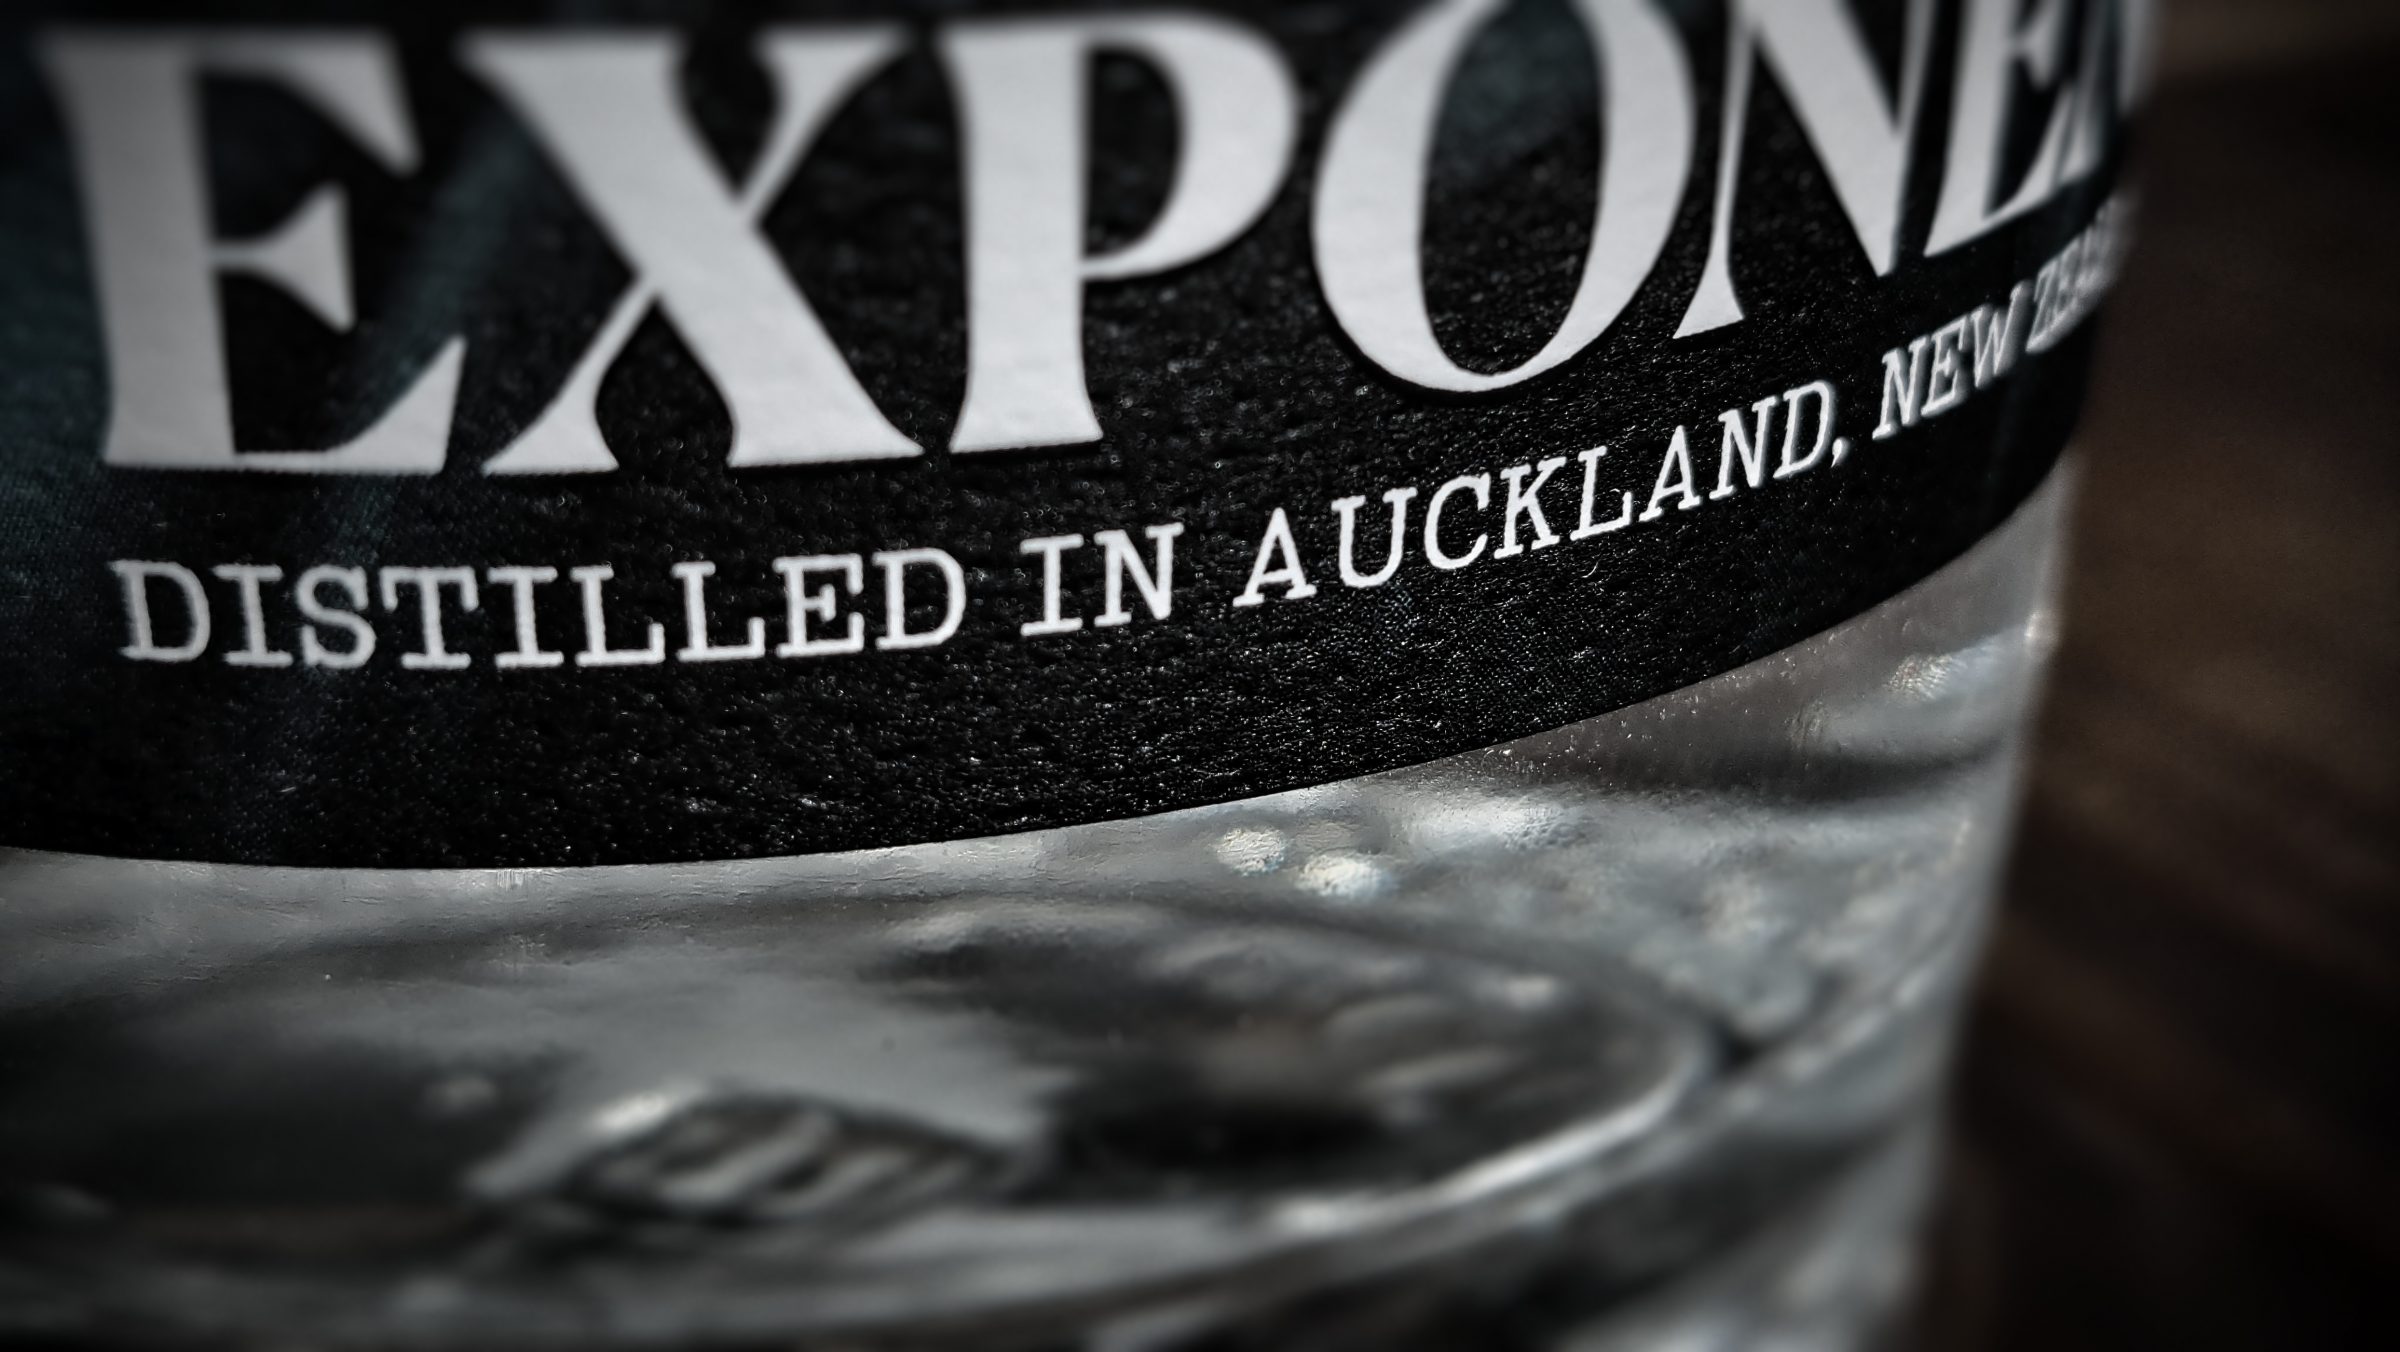 New Zealand Rum, Distilled in Auckland